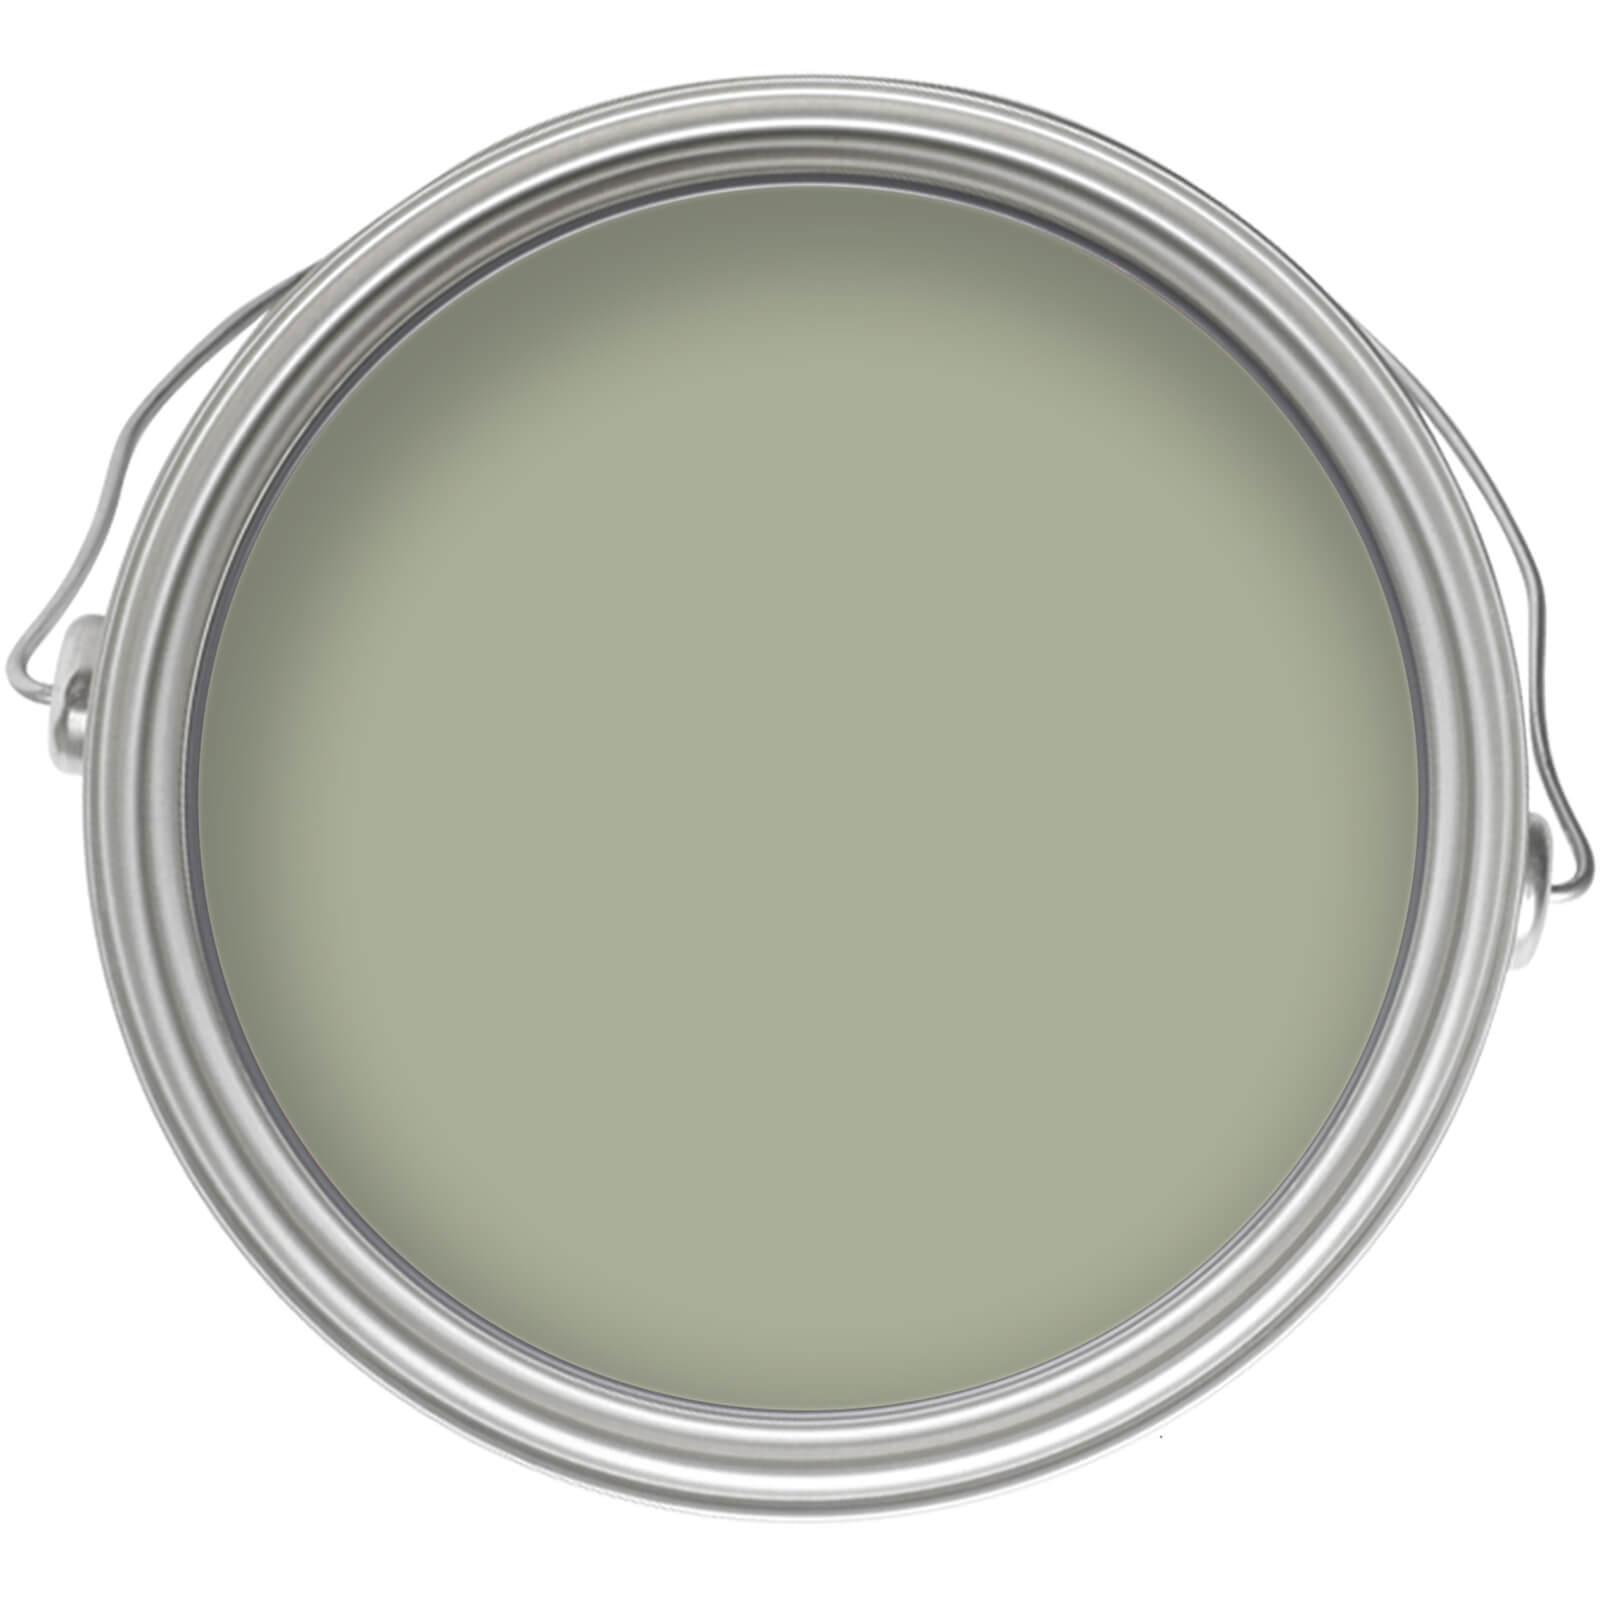 Homebase Silk Emulsion Paint Pale Olive - 2.5L